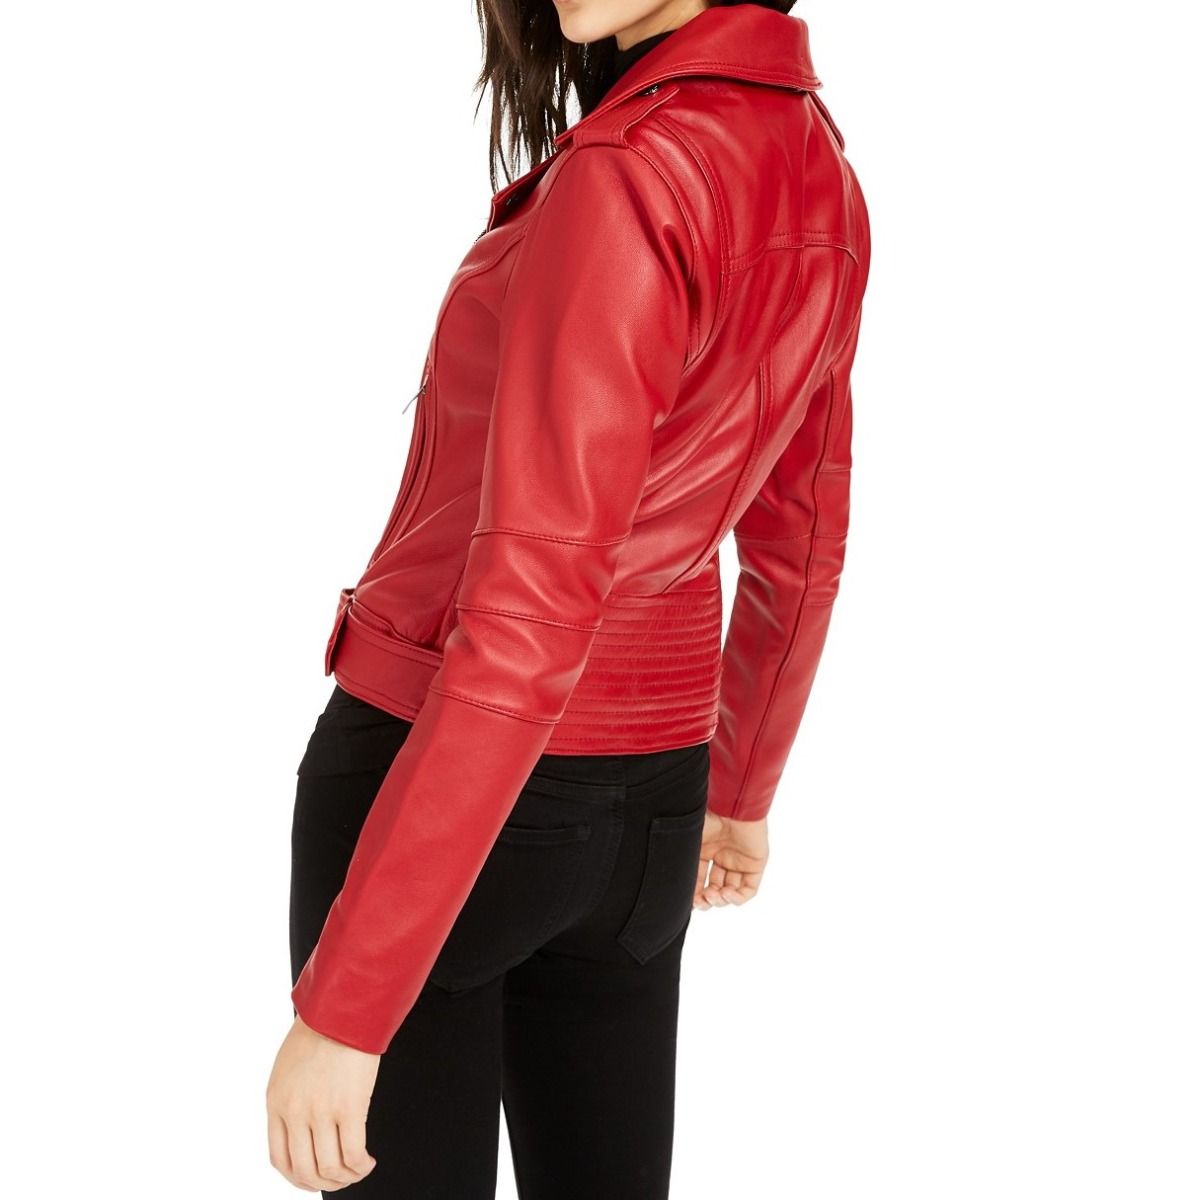 Red Waist Length Leather Biker Jacket w/ Notch Collar - Urbain